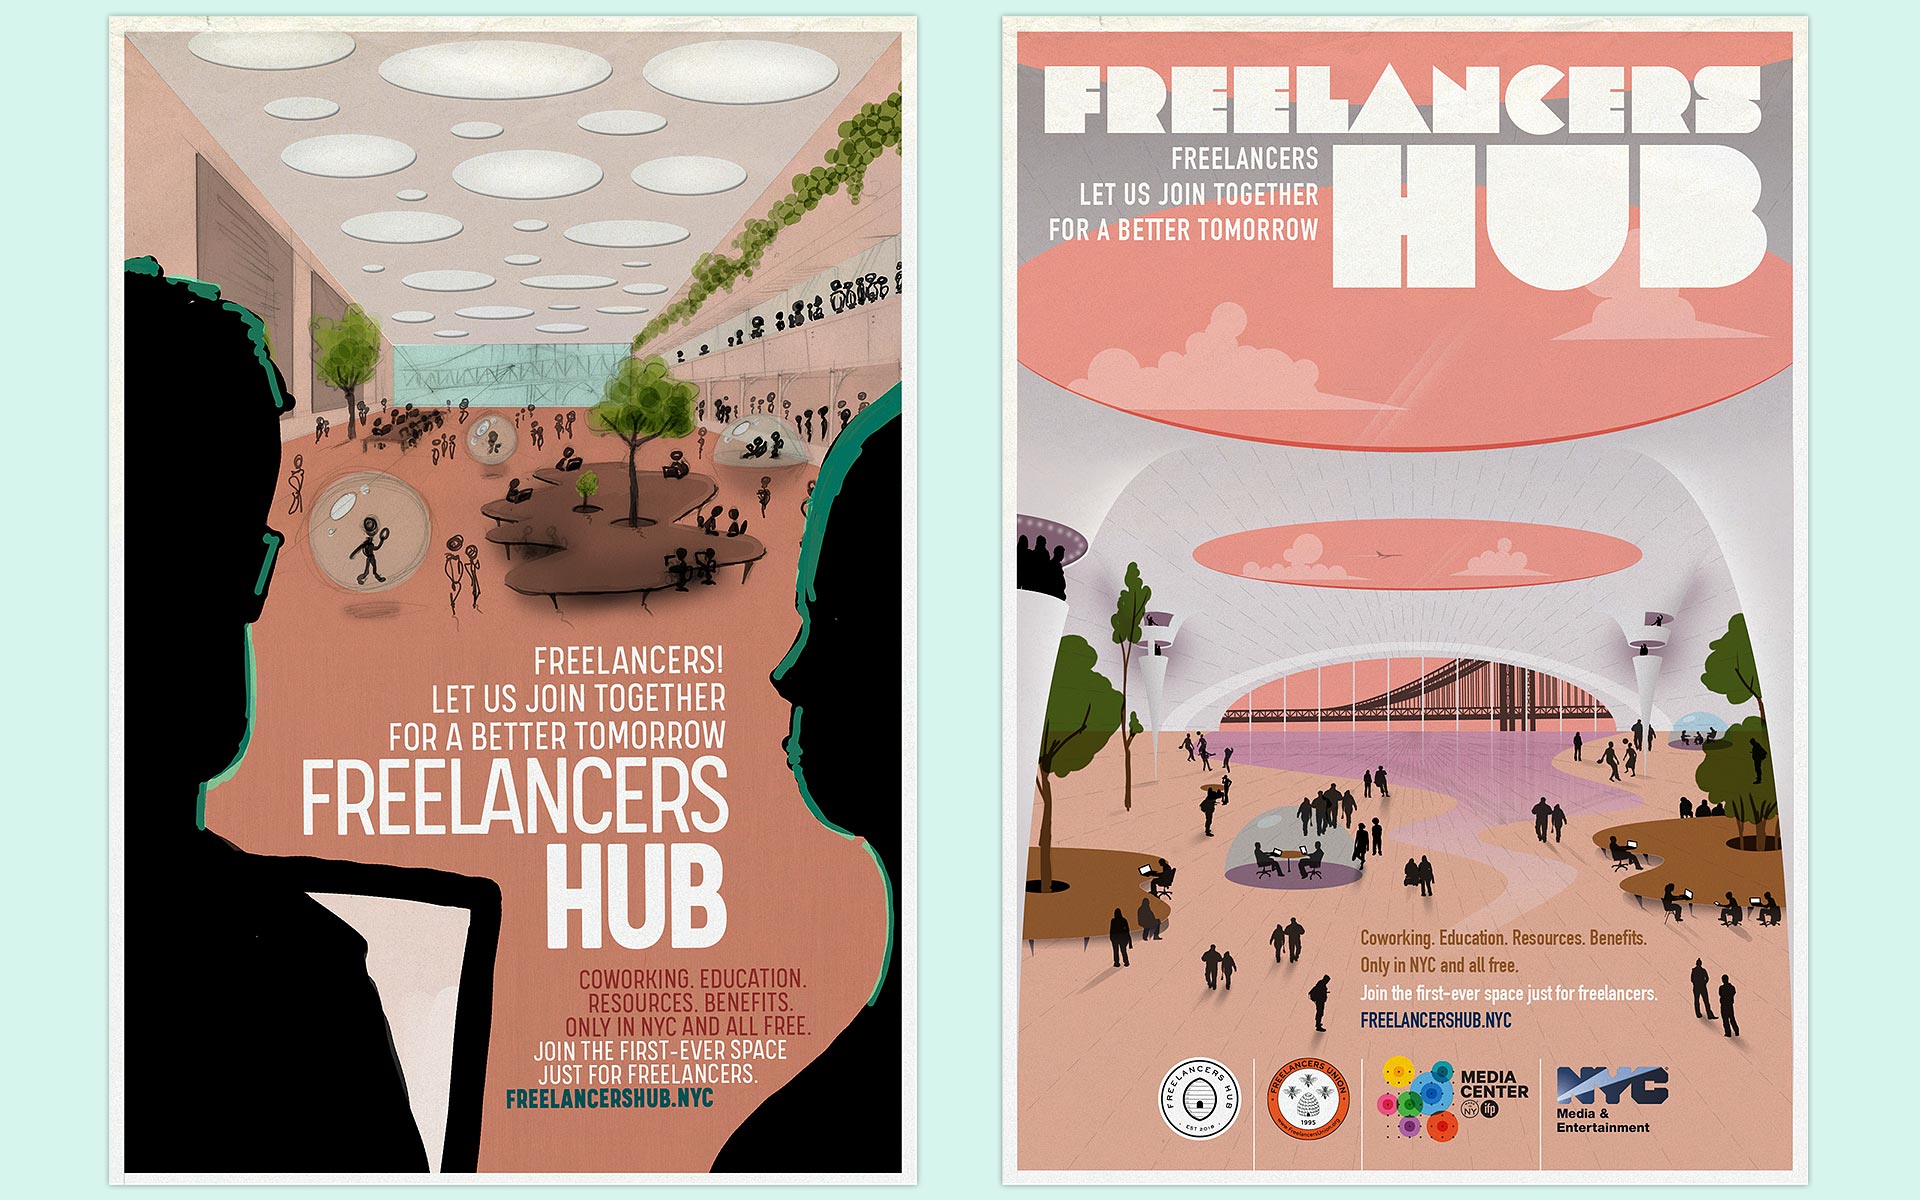 freelancers-hub-comps@2x.jpg